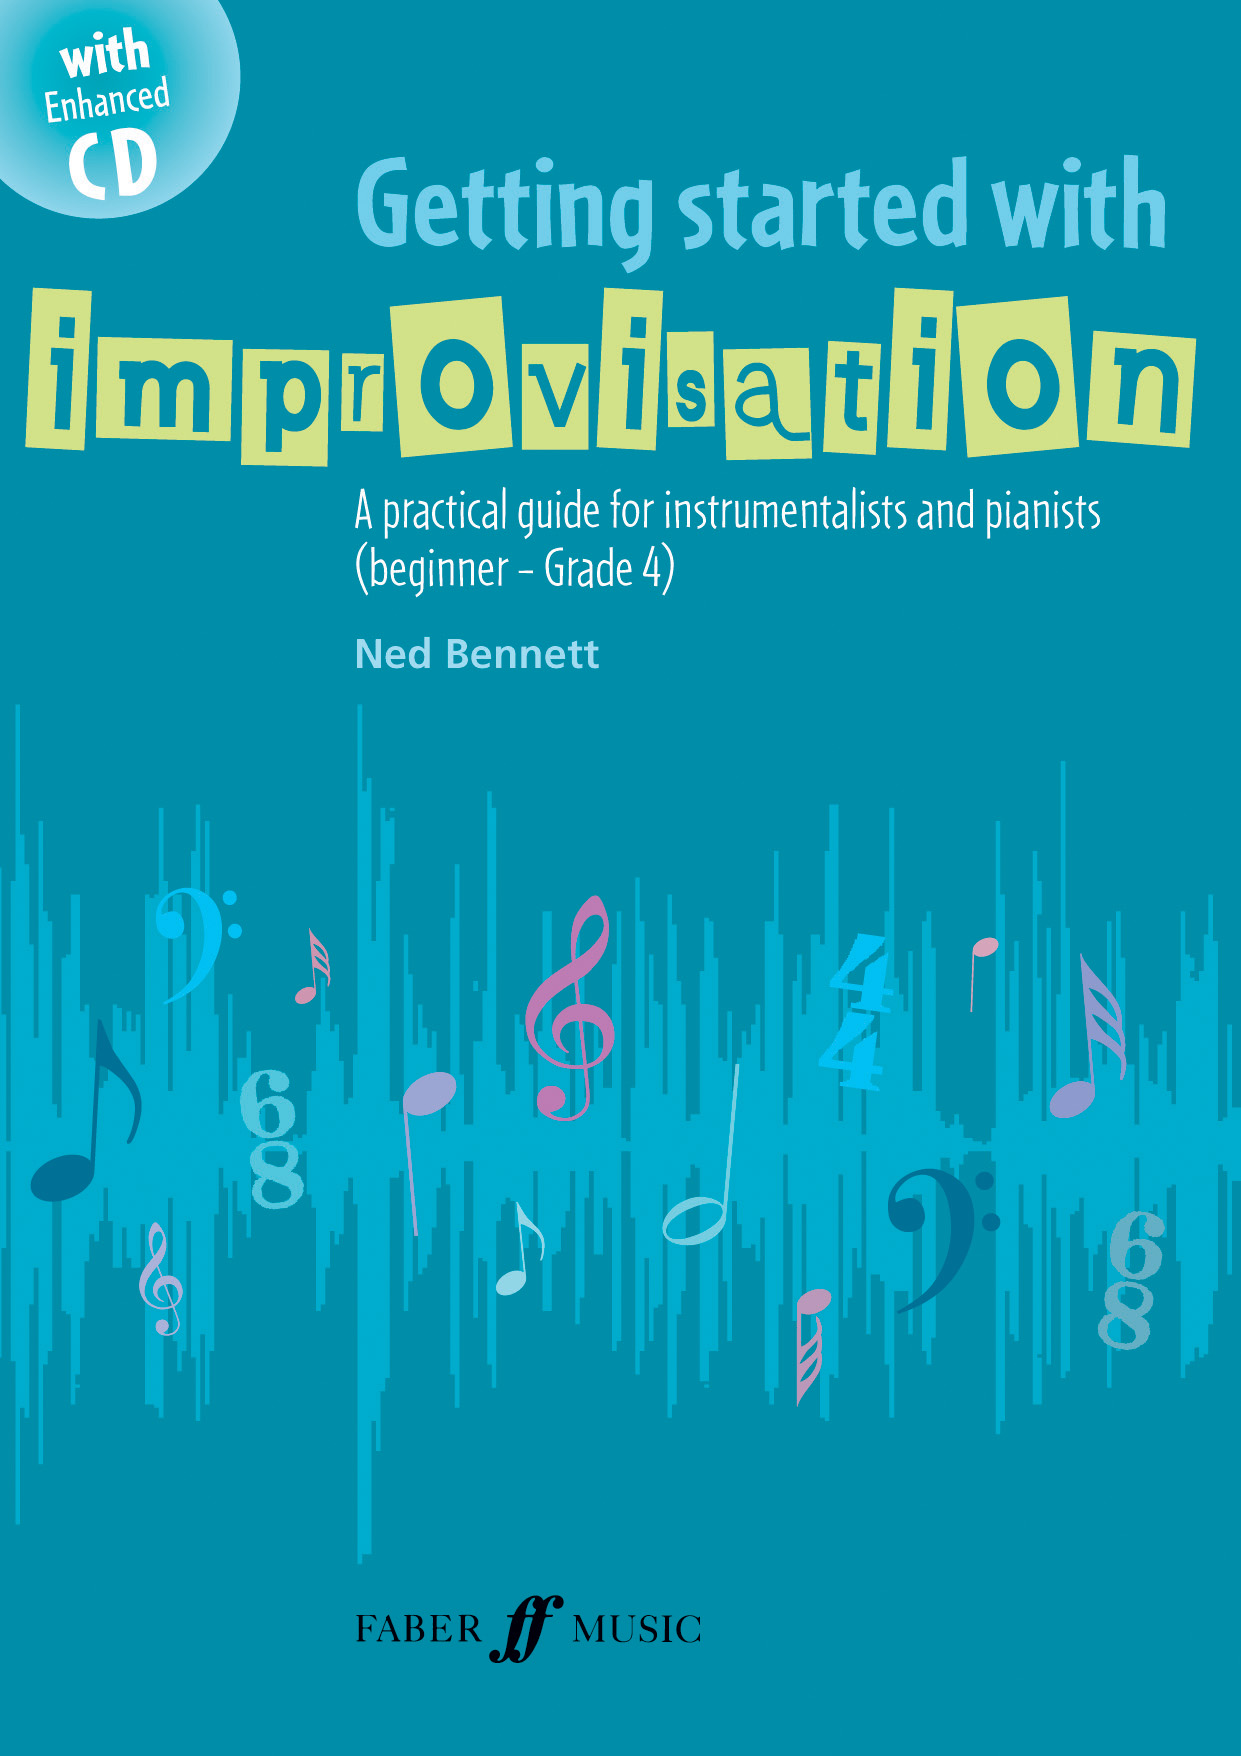 Ned Bennet: Getting started with improvisation: Instrumental Album